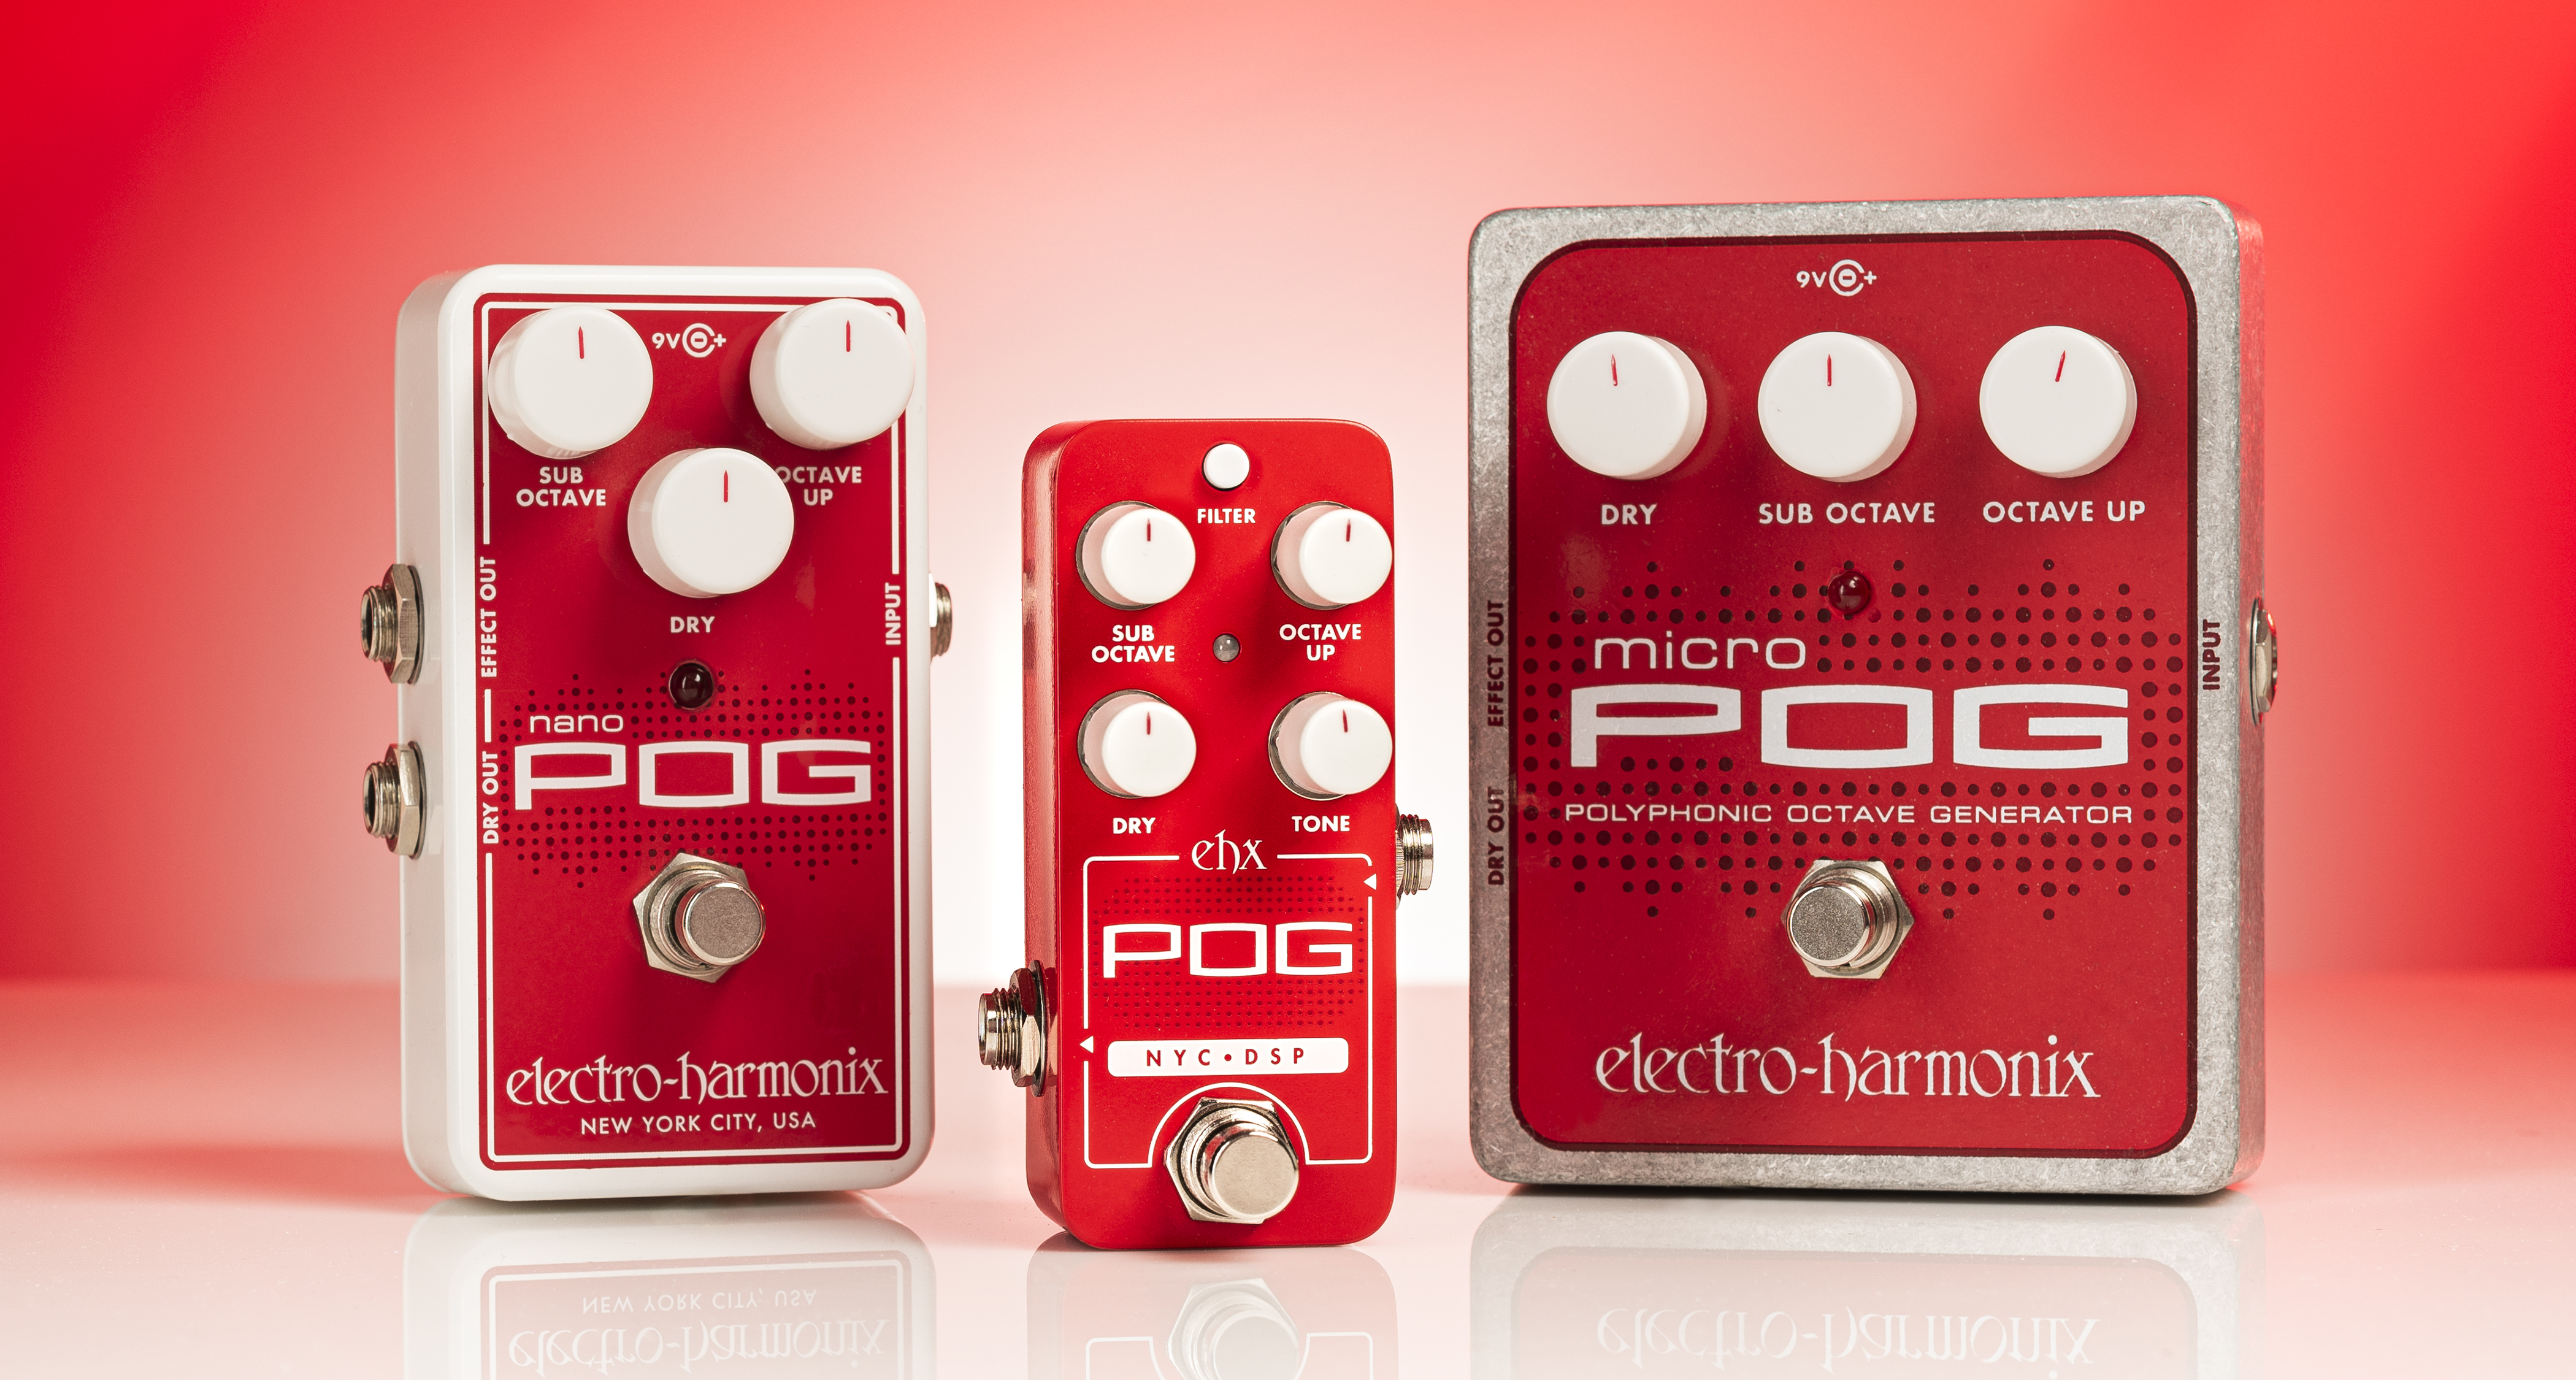 PICO POG | electro-harmonix -国内公式サイト-